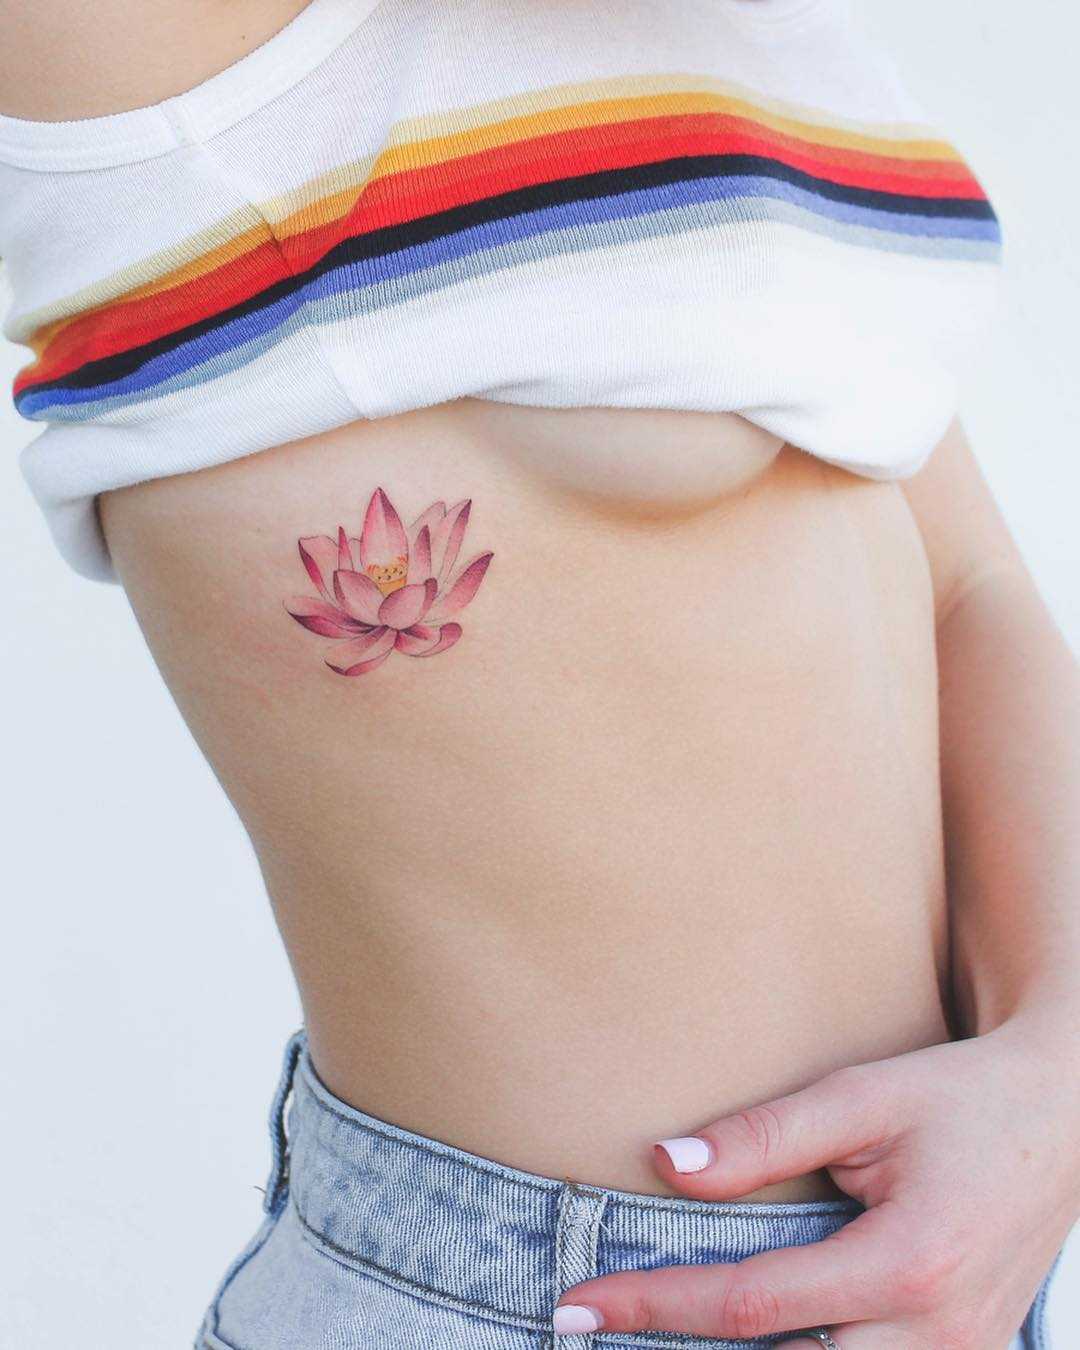 Pink Lotus tattoo on the rib cage